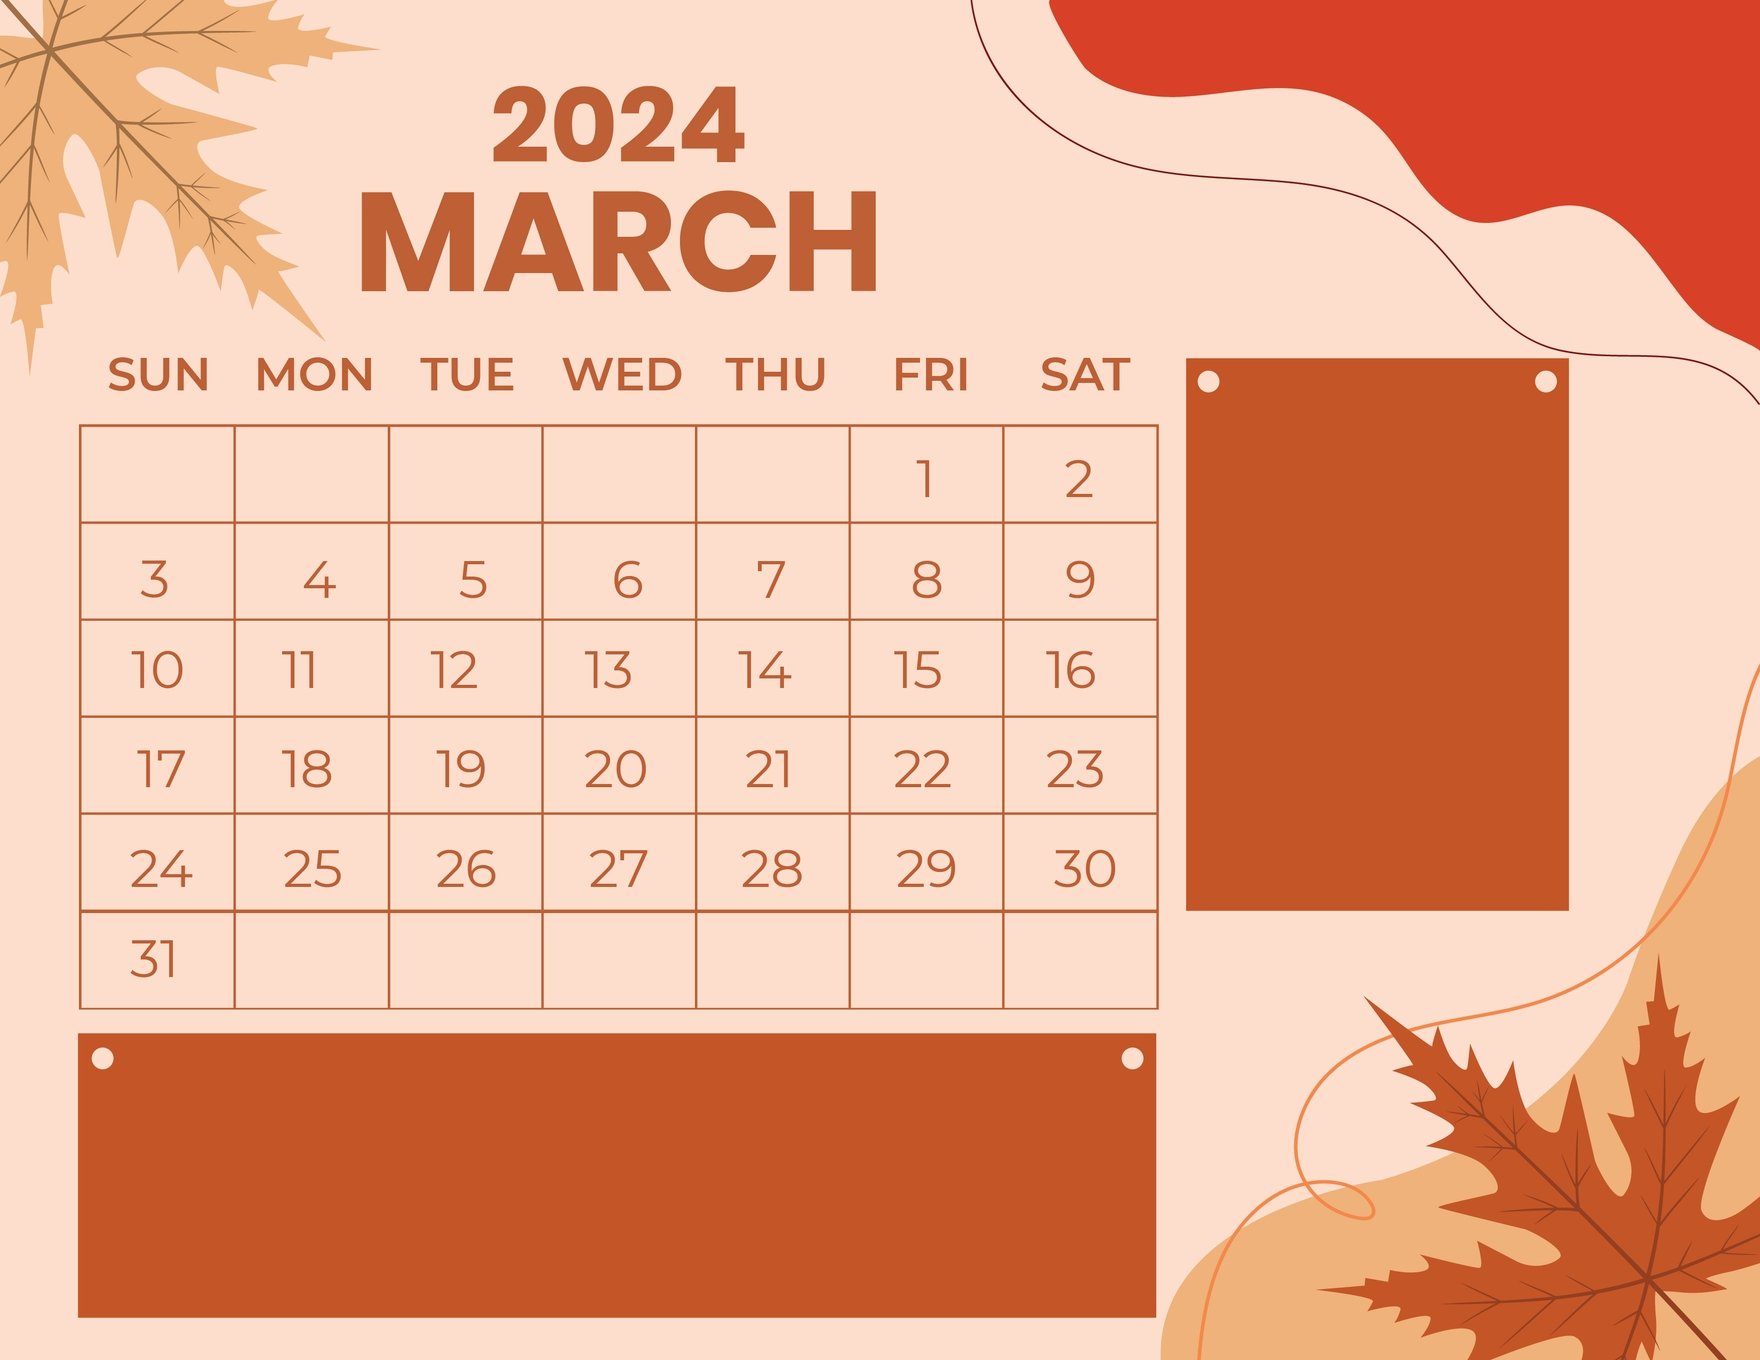 Free Blank March 2024 Calendar in Word, Illustrator, EPS, SVG, JPG